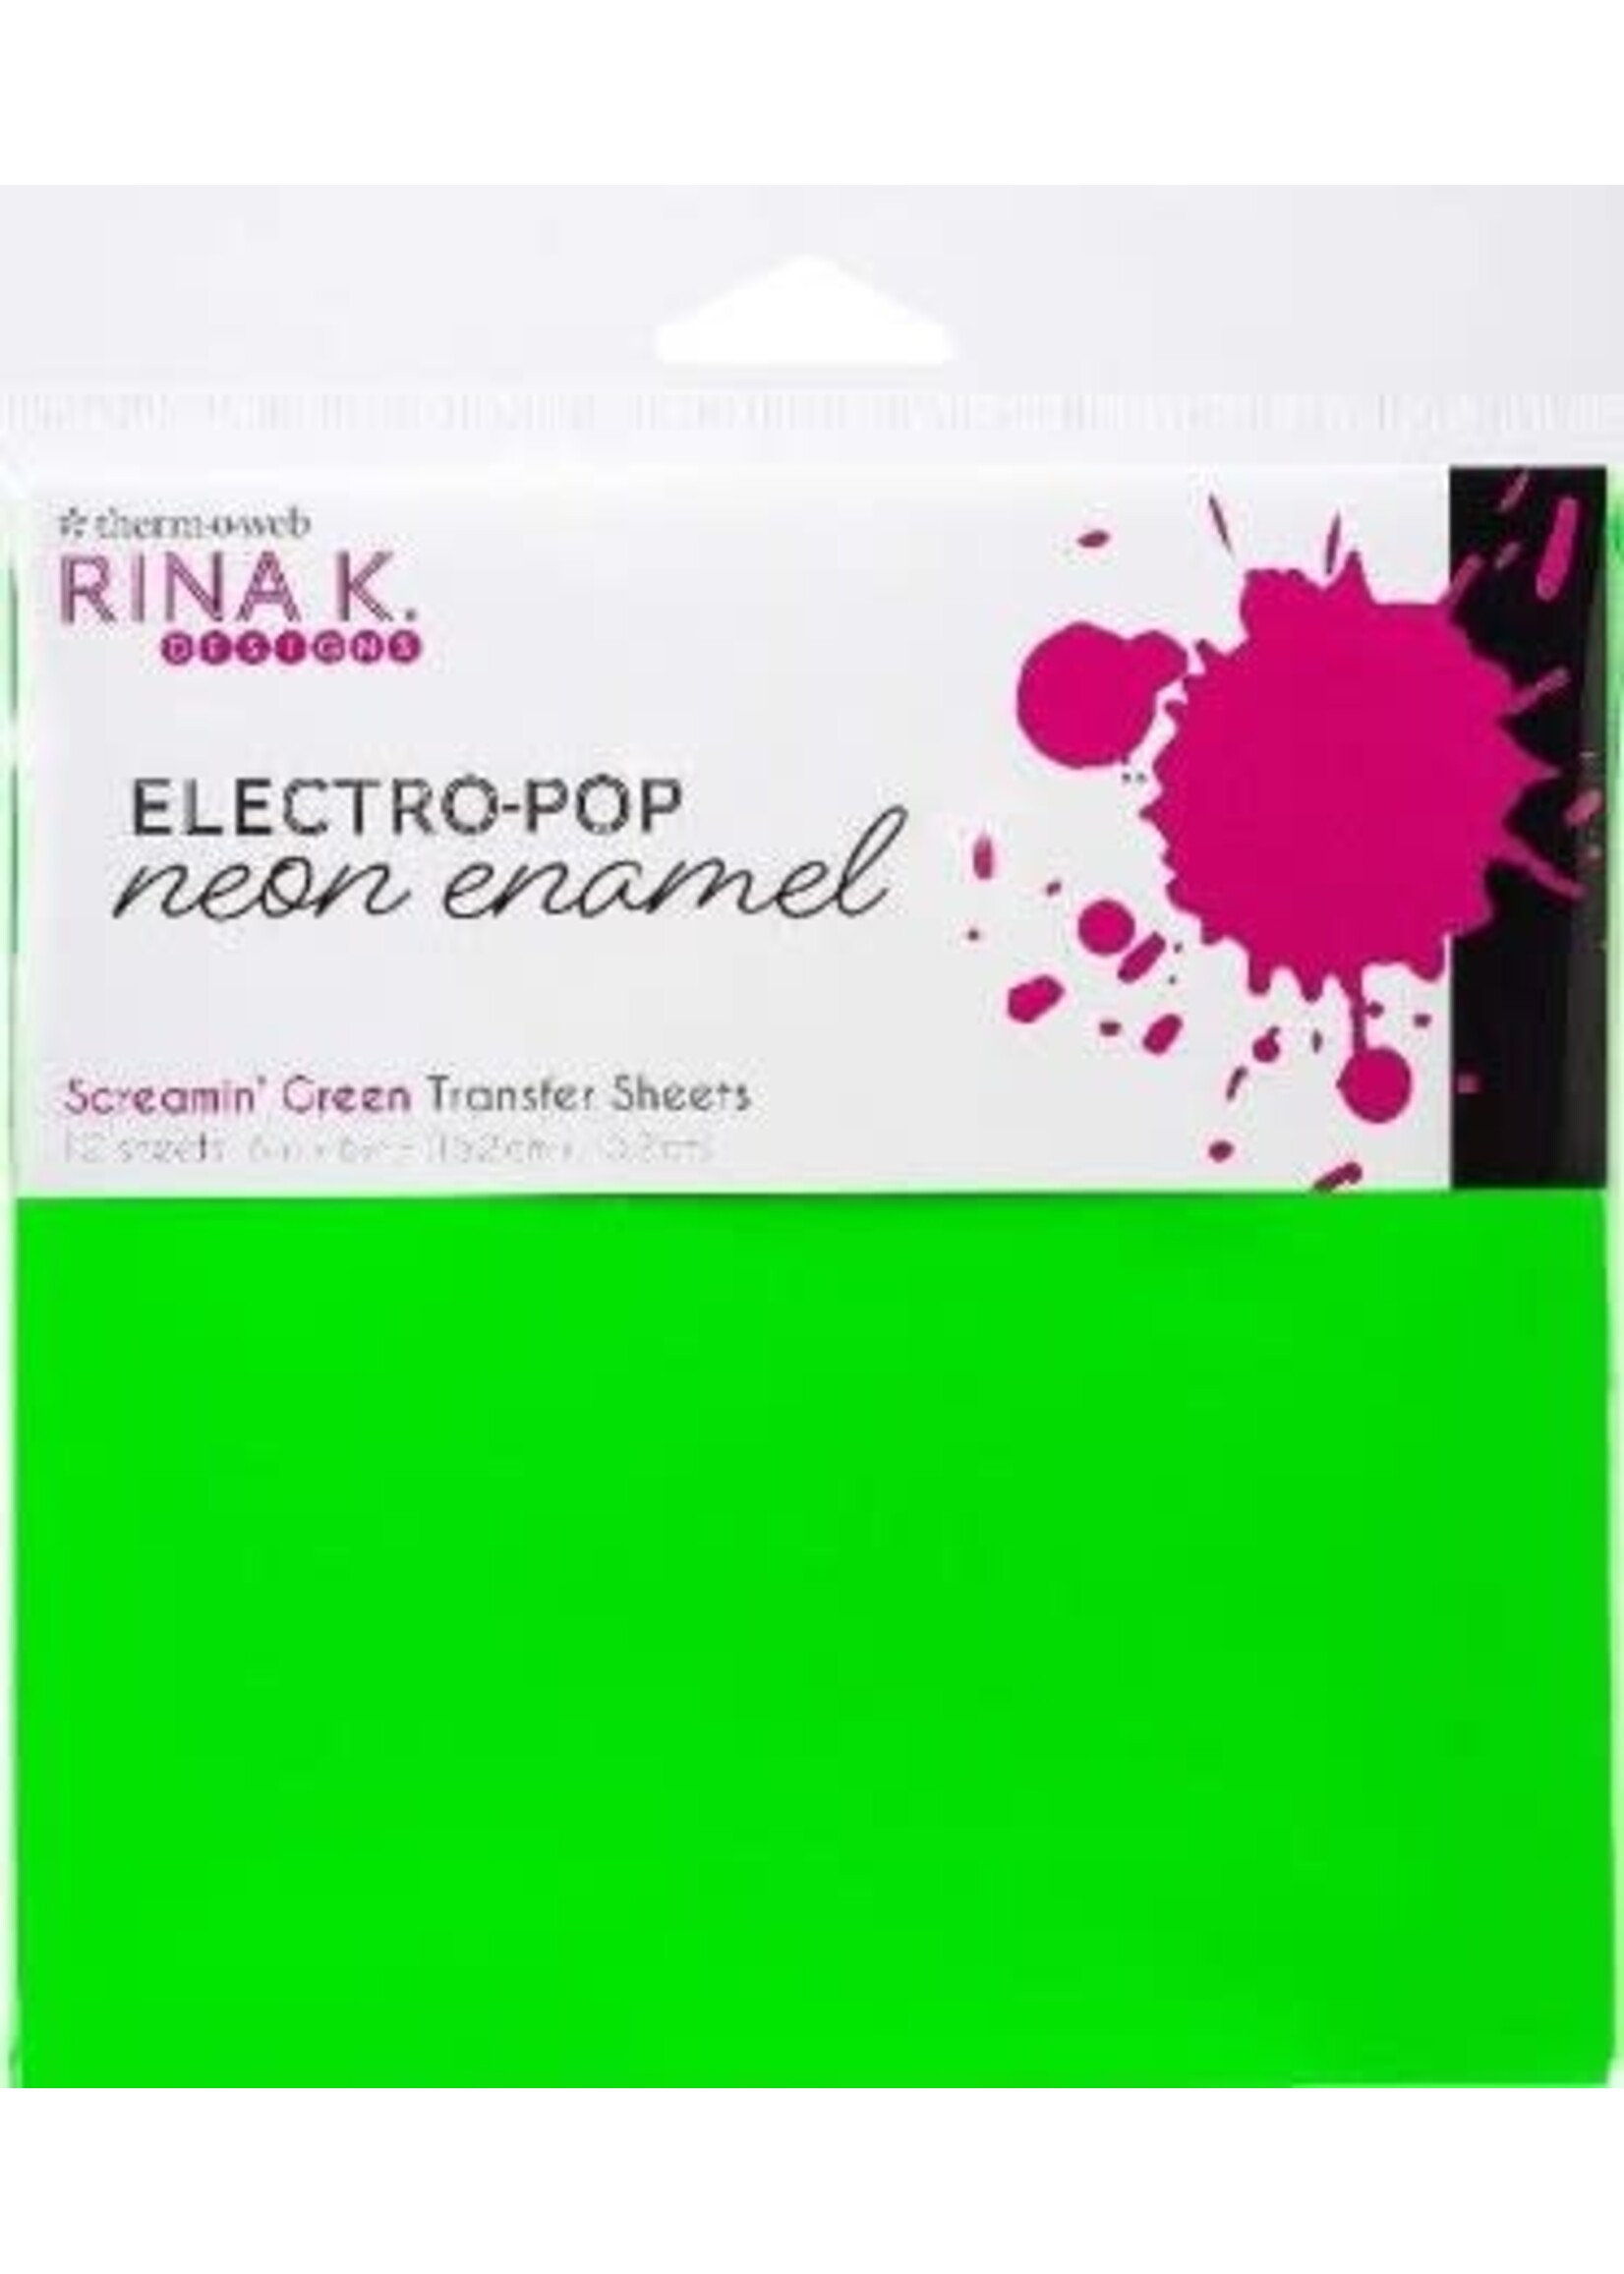 Gina K Rina K Electro-Pop neon enamel, Screamin' Green